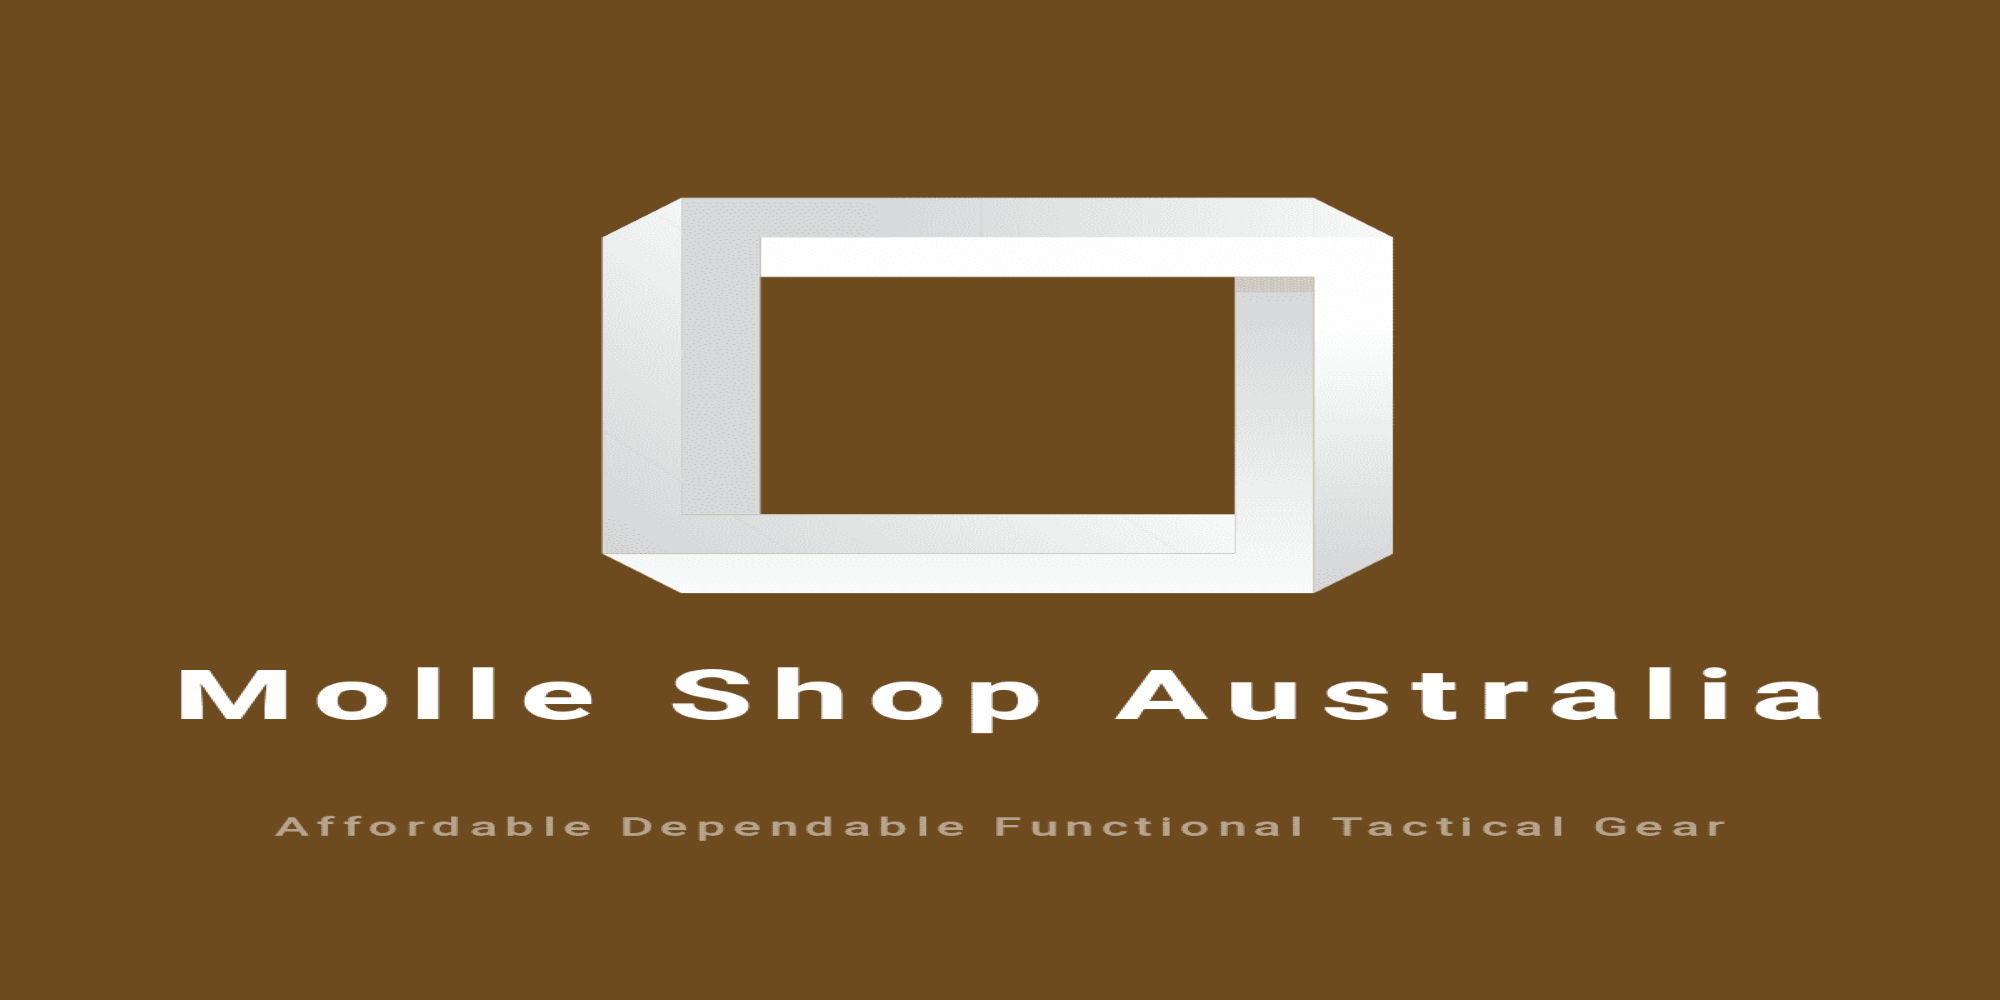 Molle Shop Australia